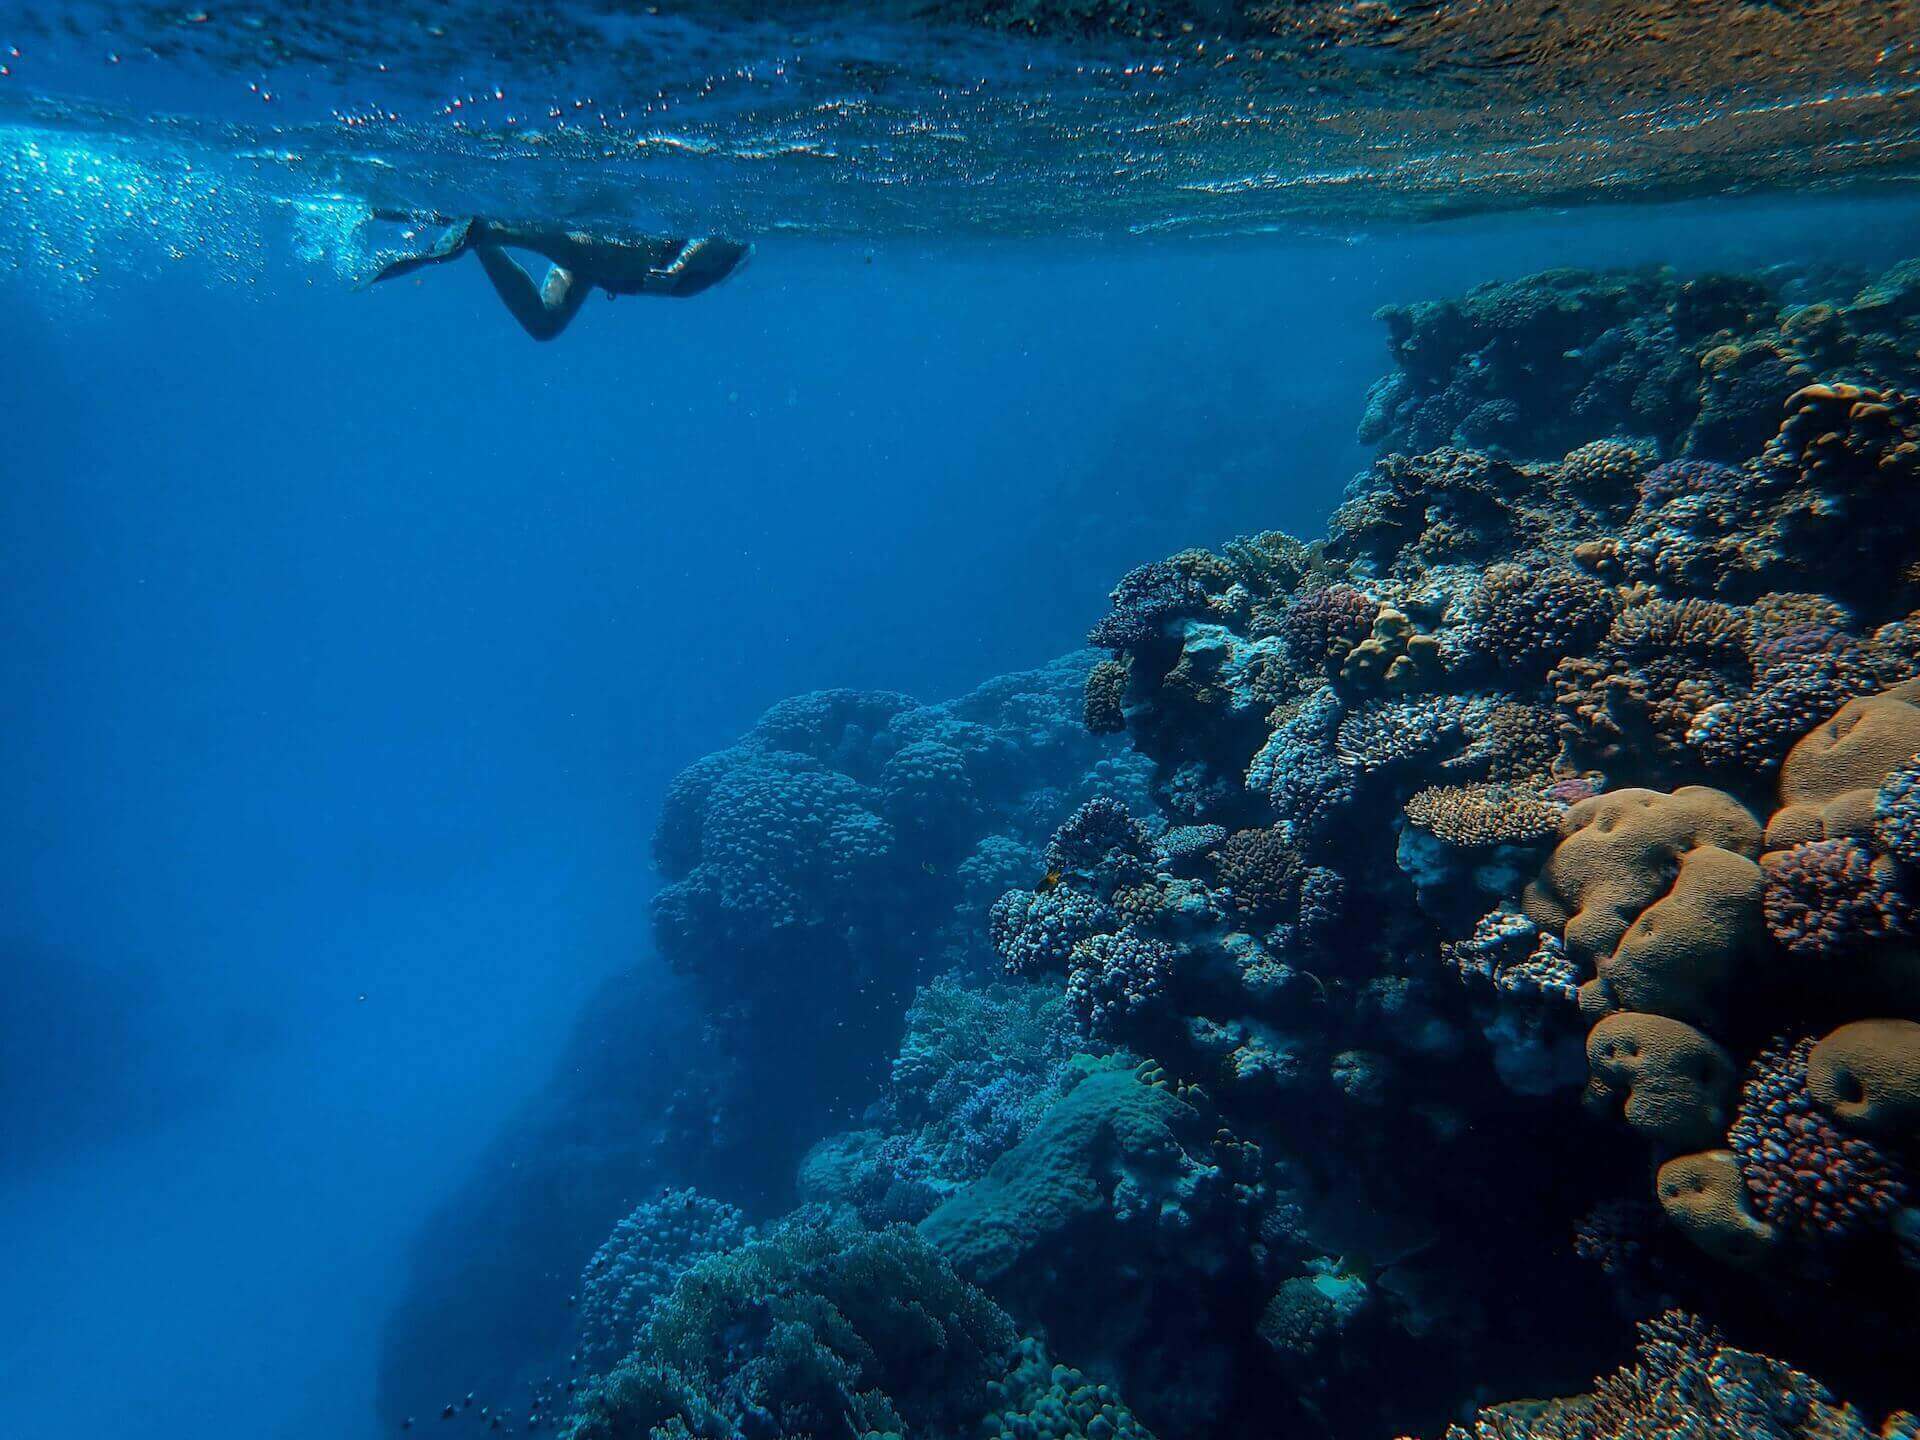 A diver underwater